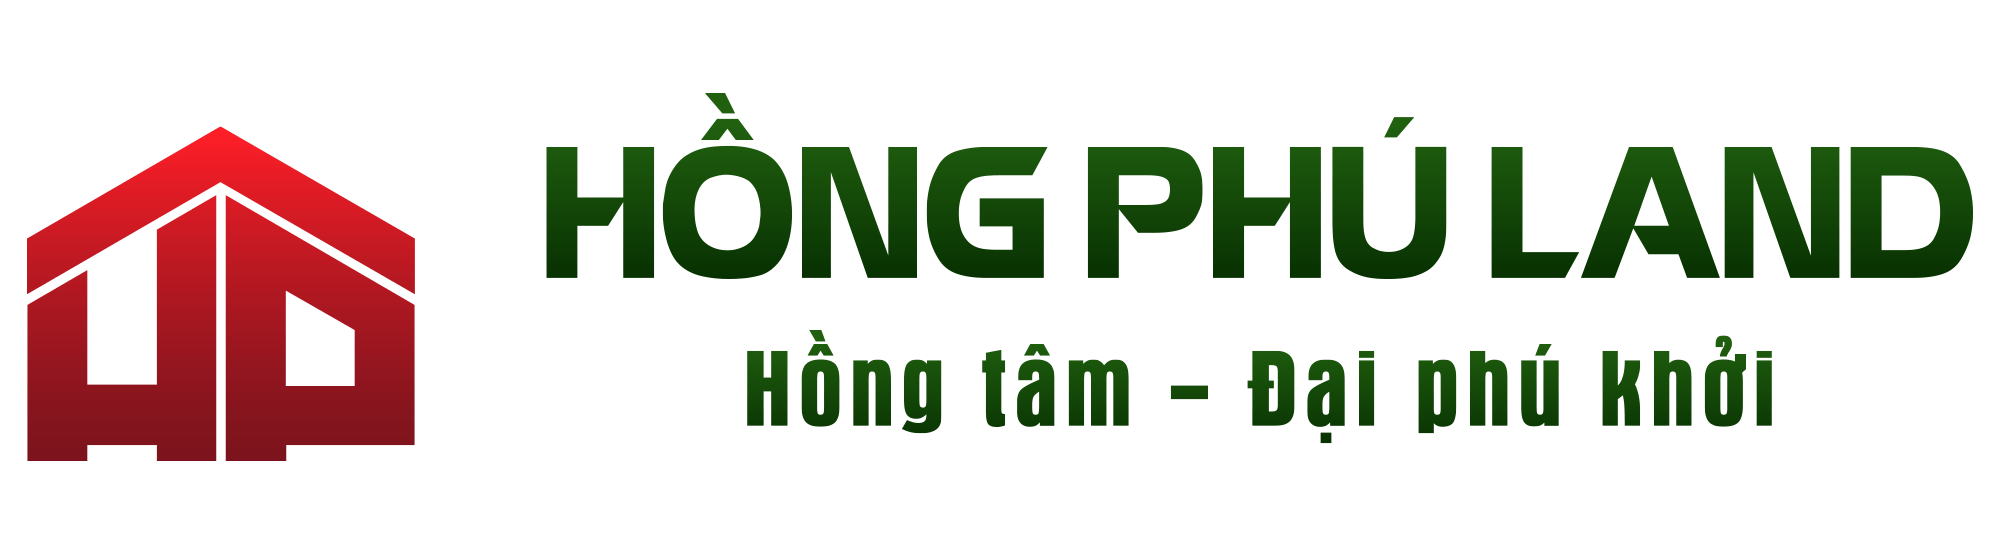 Hồng Phú Land